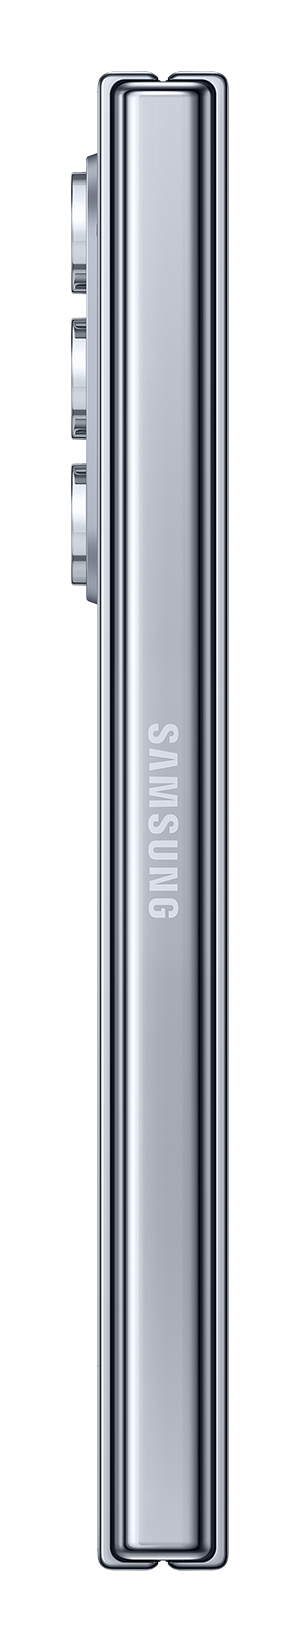 Samsung Fold5 light blue side